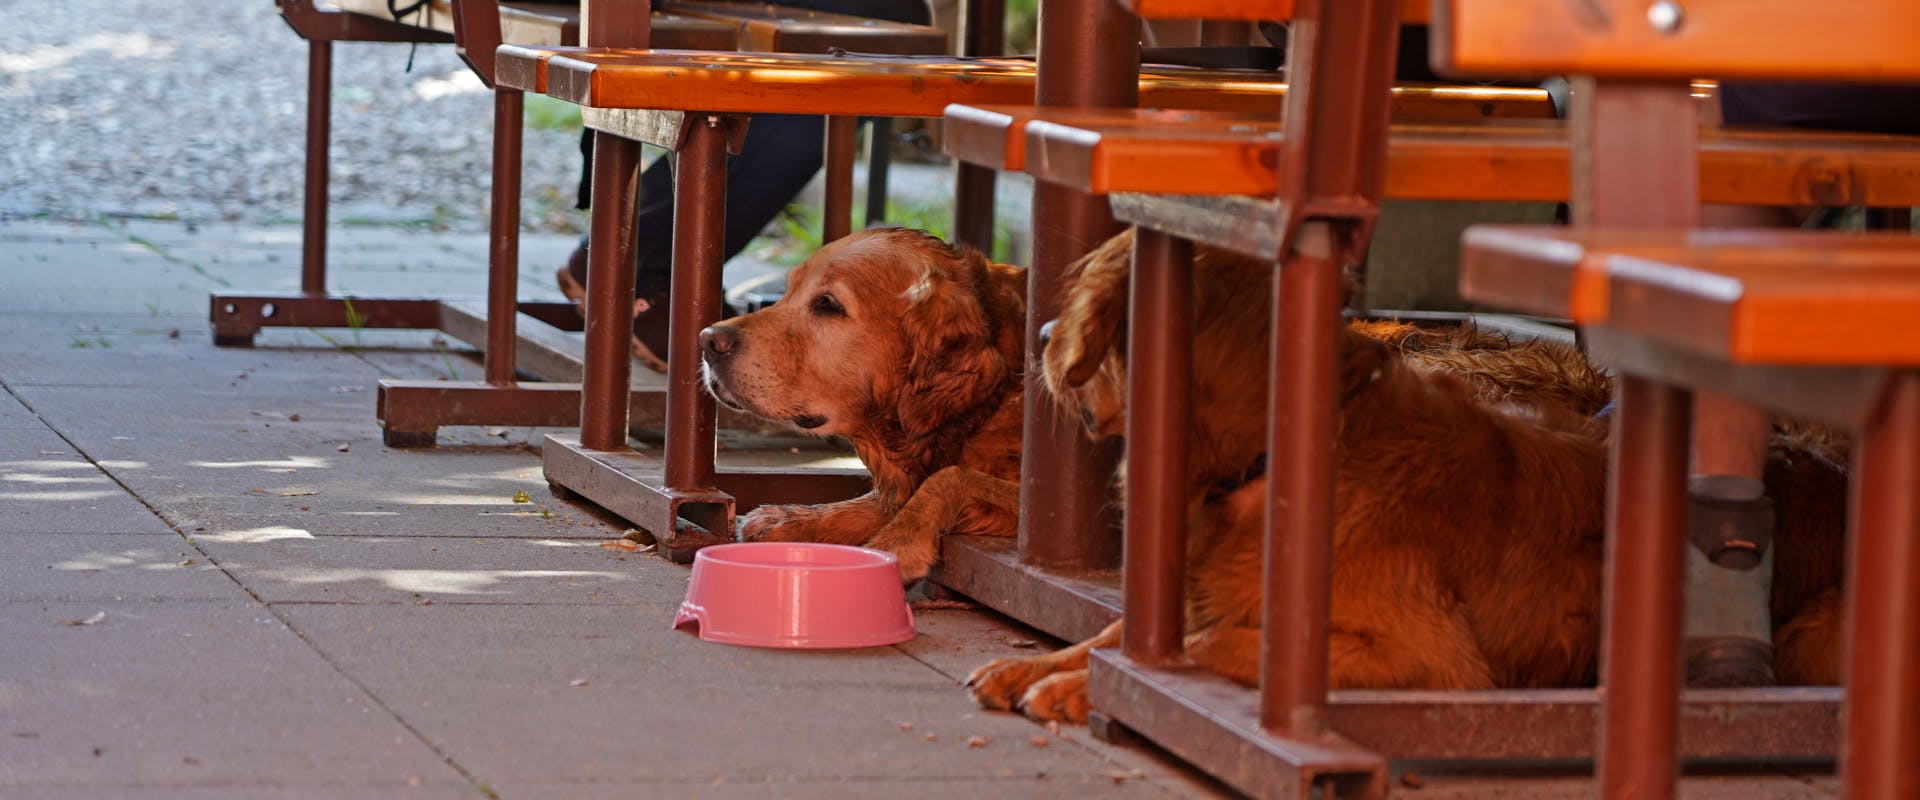 Two golden retrievers in an outdoors dog friendly restaurant.